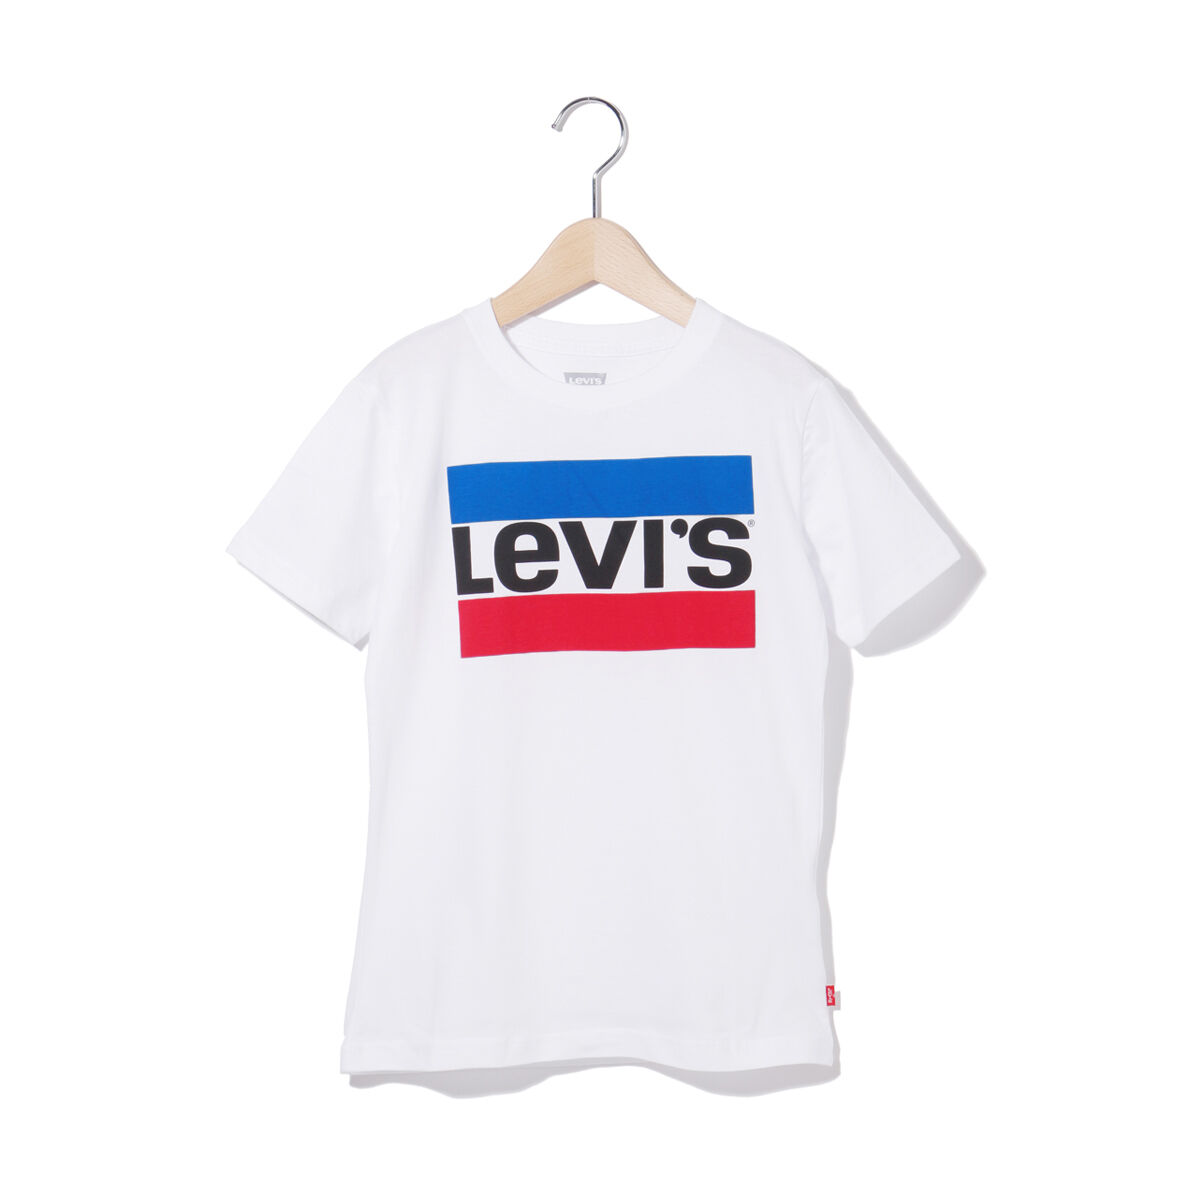 levis top price